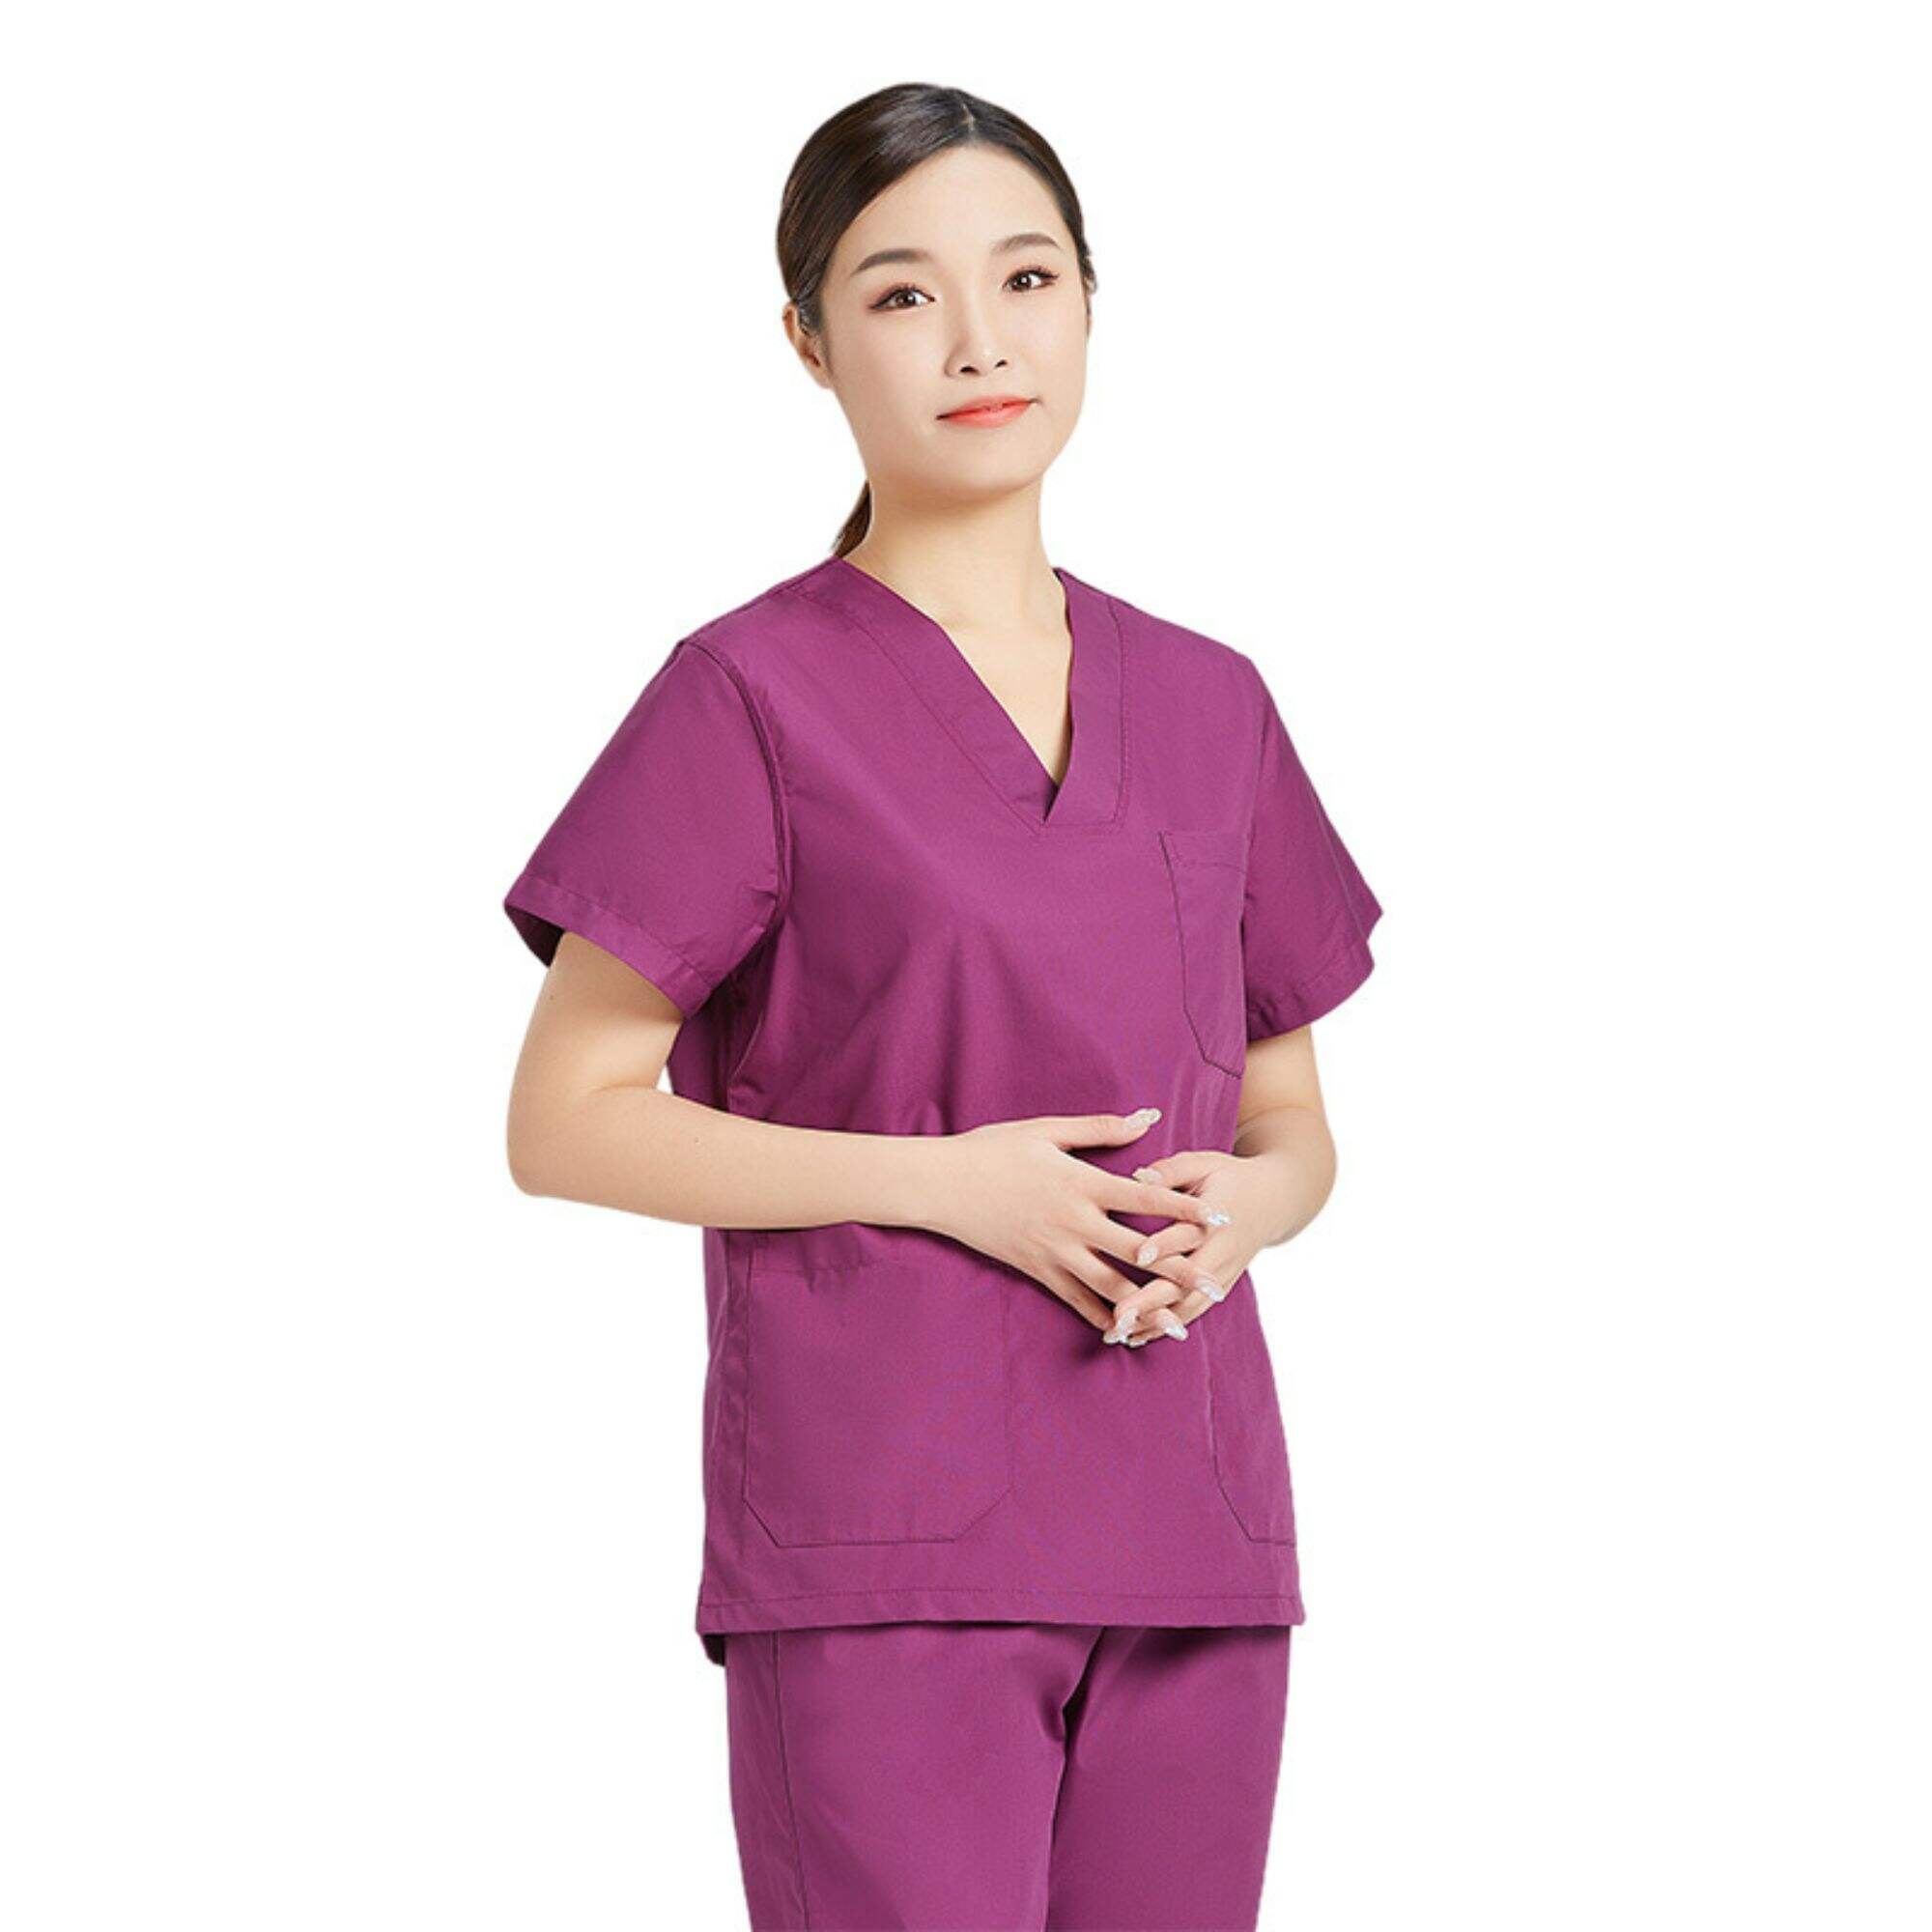  Hot Sale Fashionable doctor Uniform Medical Nurse Scrub Suit